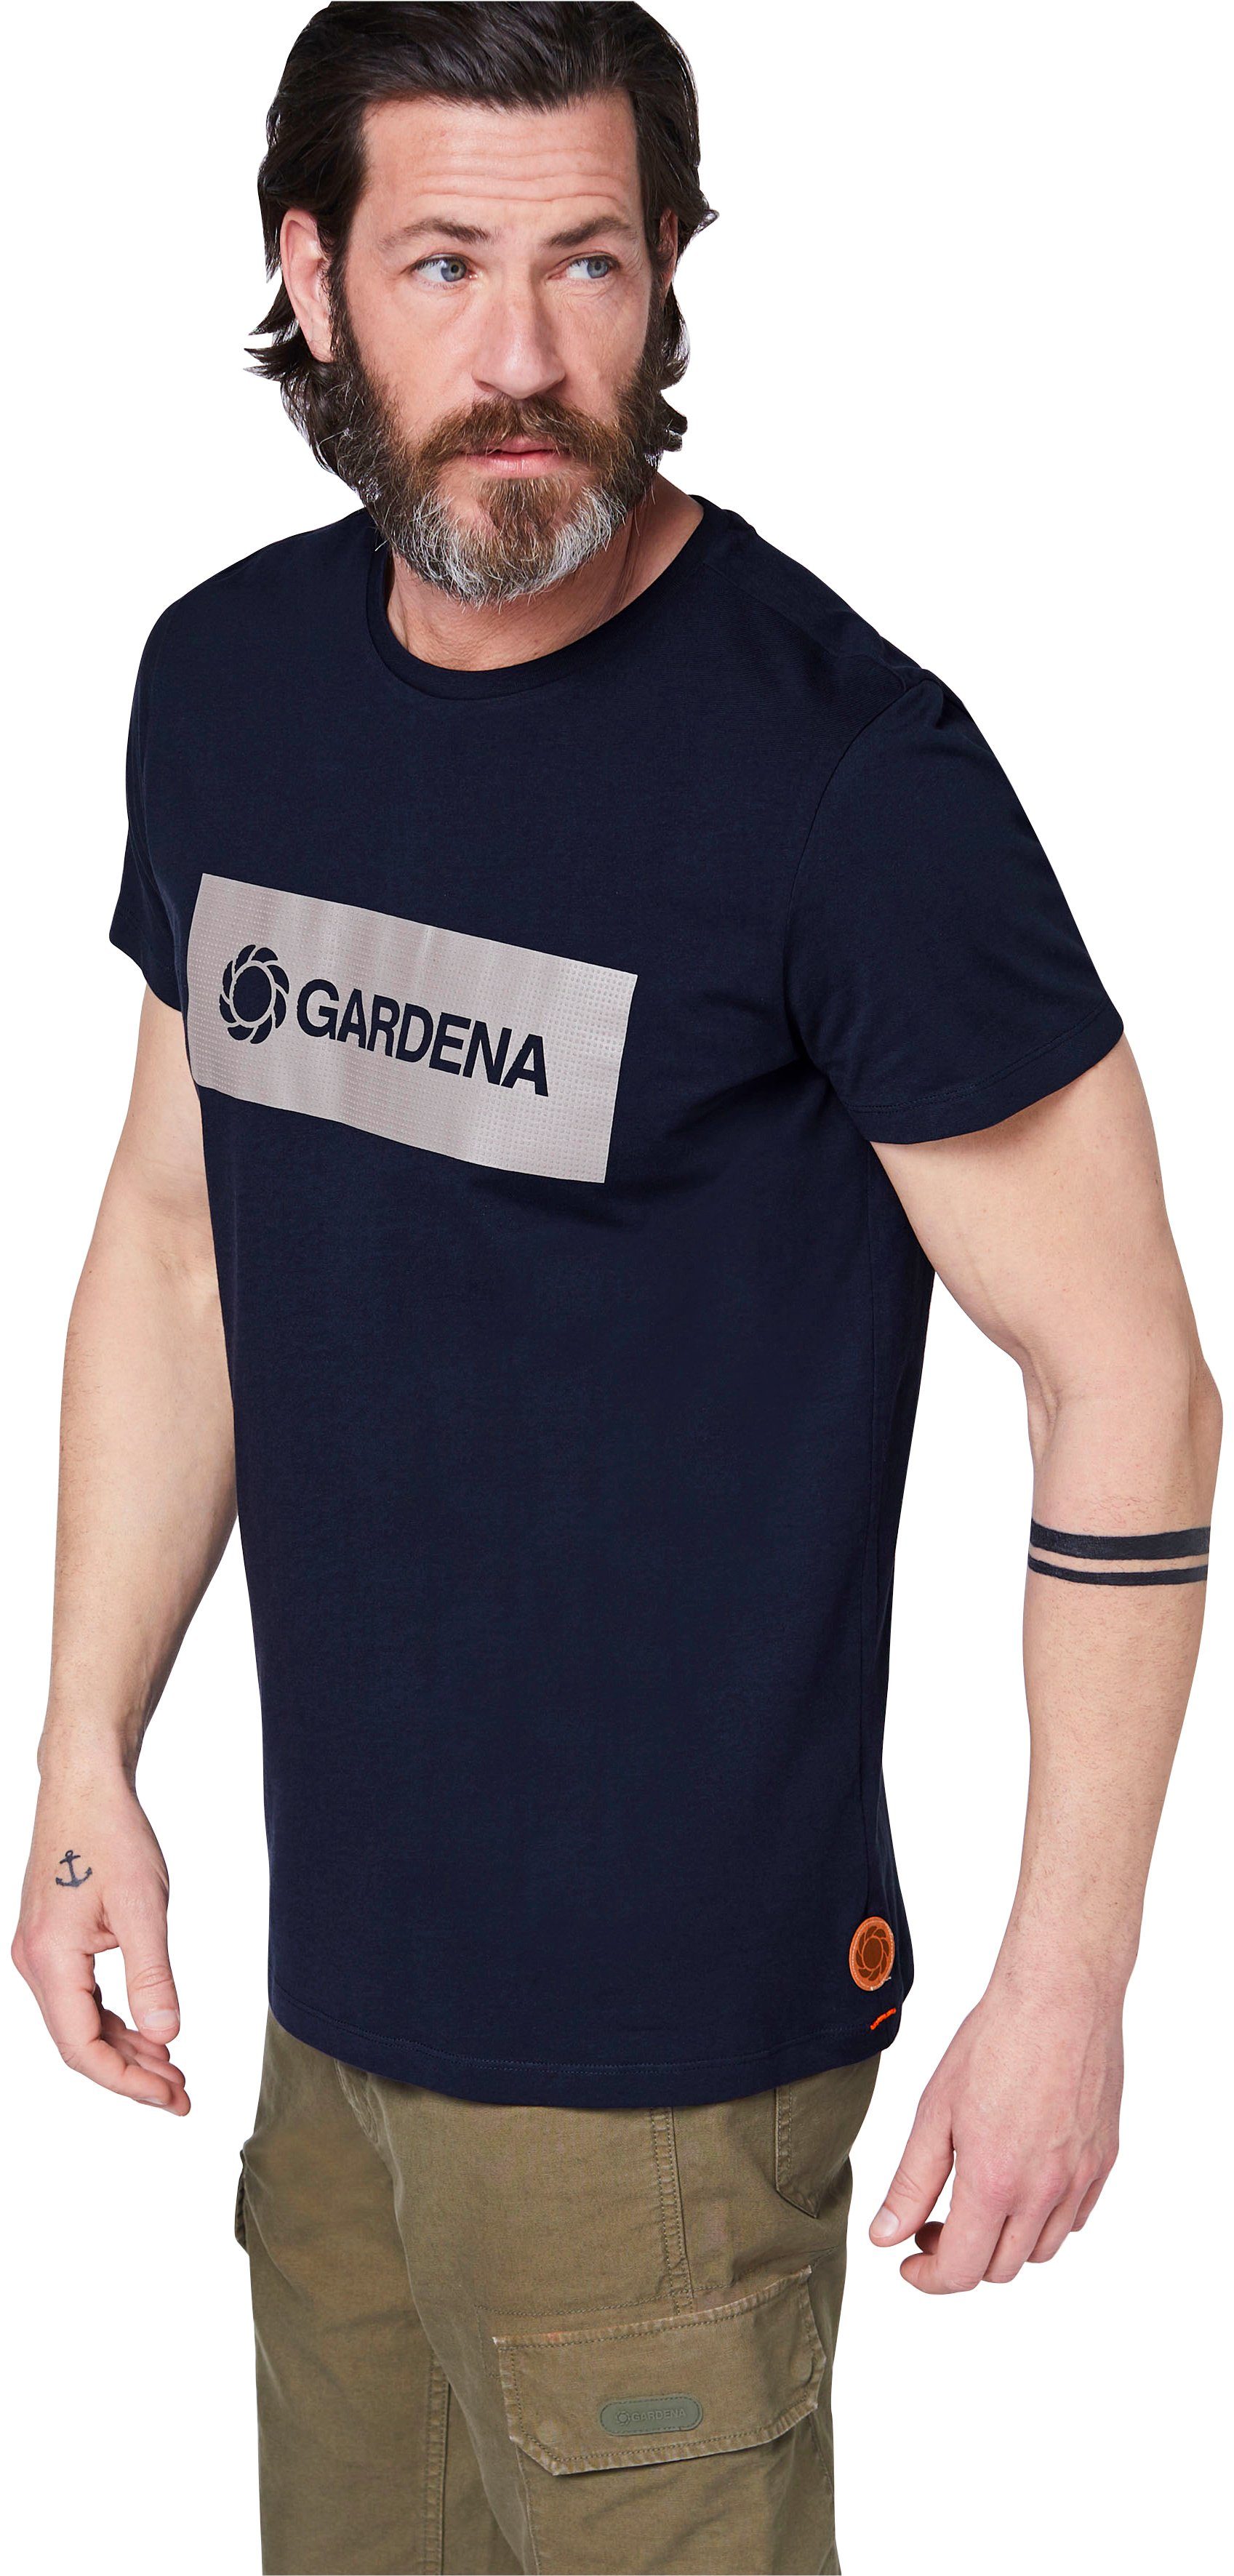 GARDENA T-Shirt Night Sky mit Gardena-Logodruck